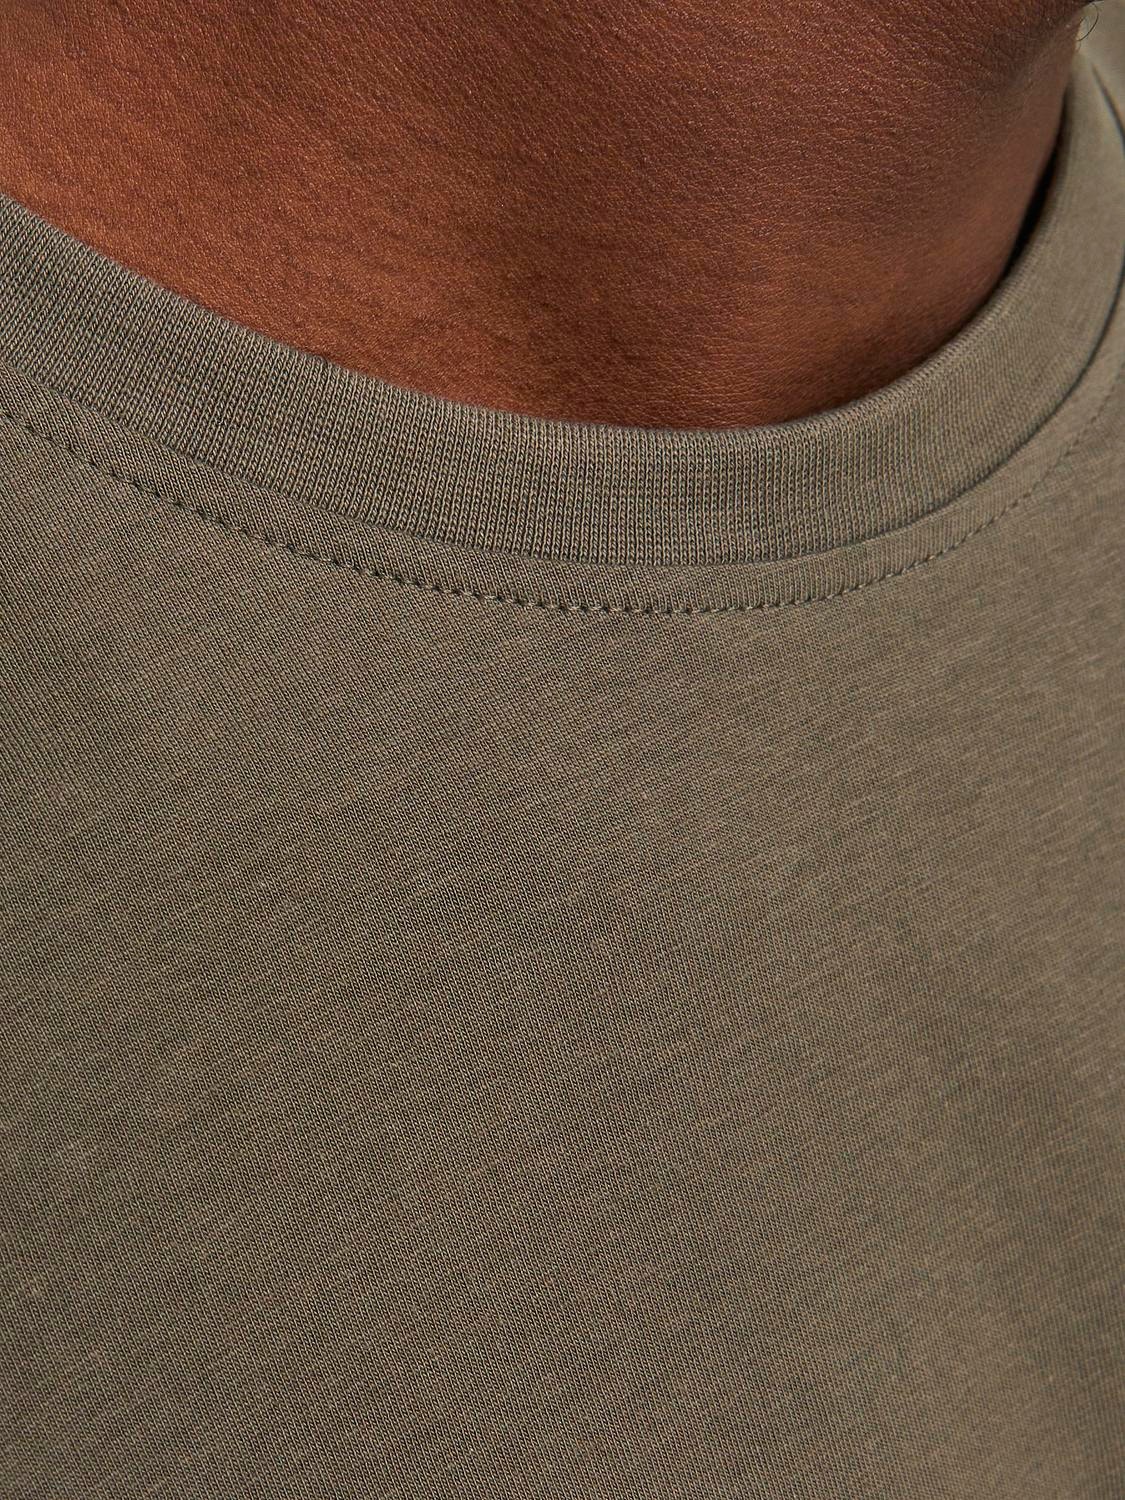 Jack & Jones Plain Crew neck T-shirt -Bungee Cord - 12113648